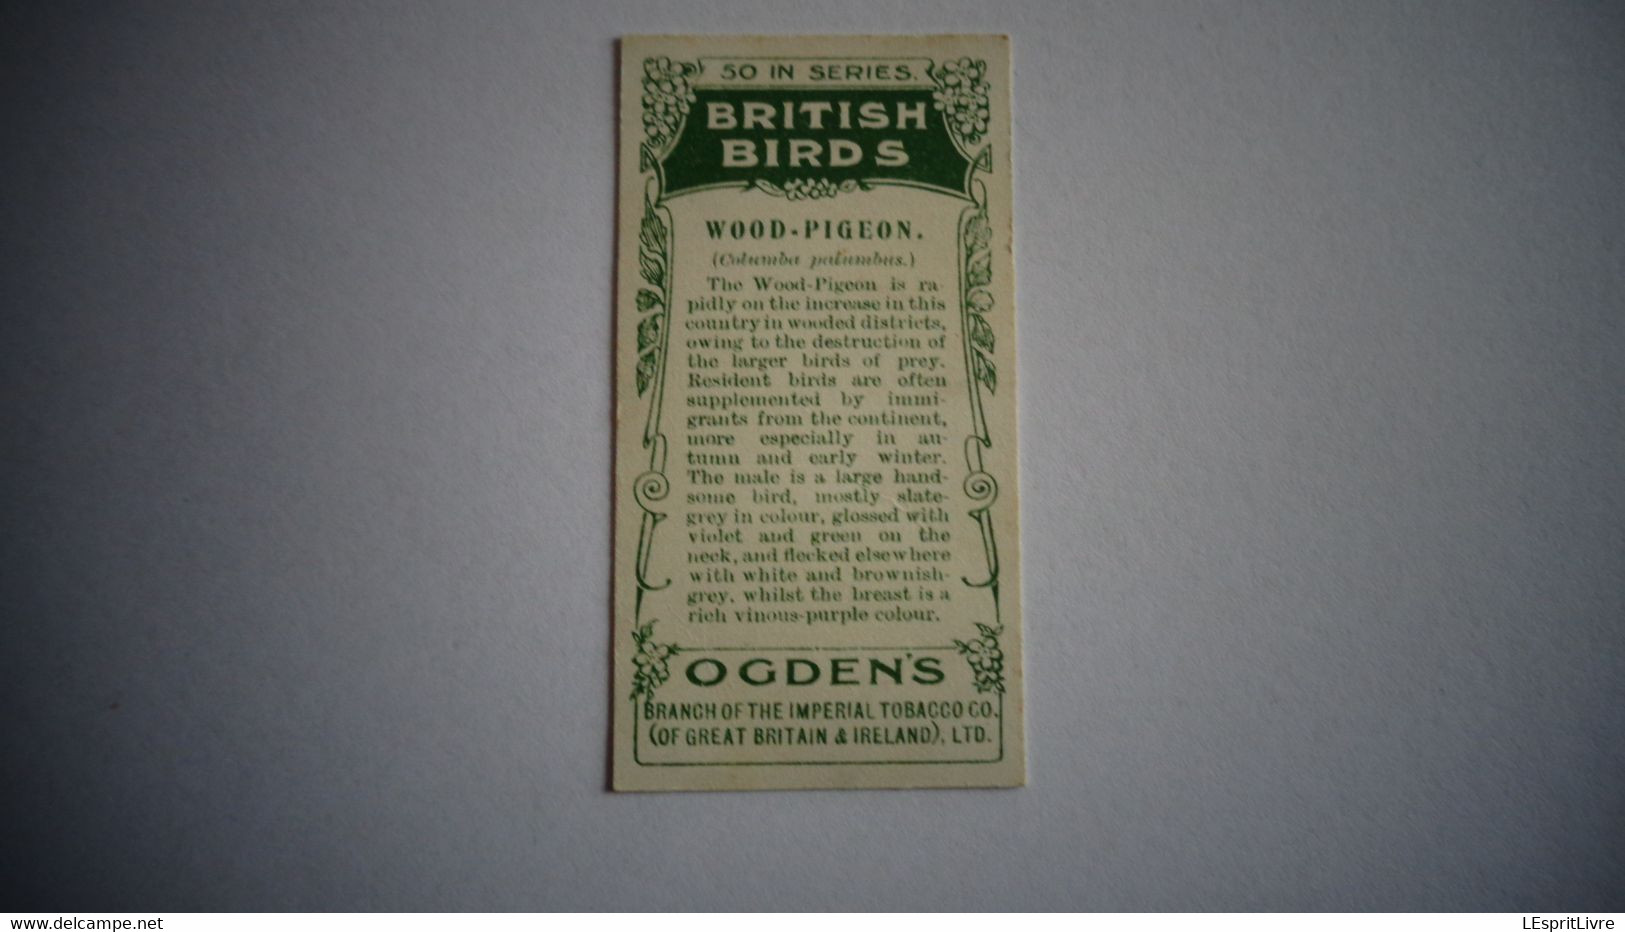 BRITISH BIRDS N° 5 WOOD PIGEON Oiseau Bird  Cigarettes OGDEN'S Tobacco Vignette Trading Card Chromo - Ogden's